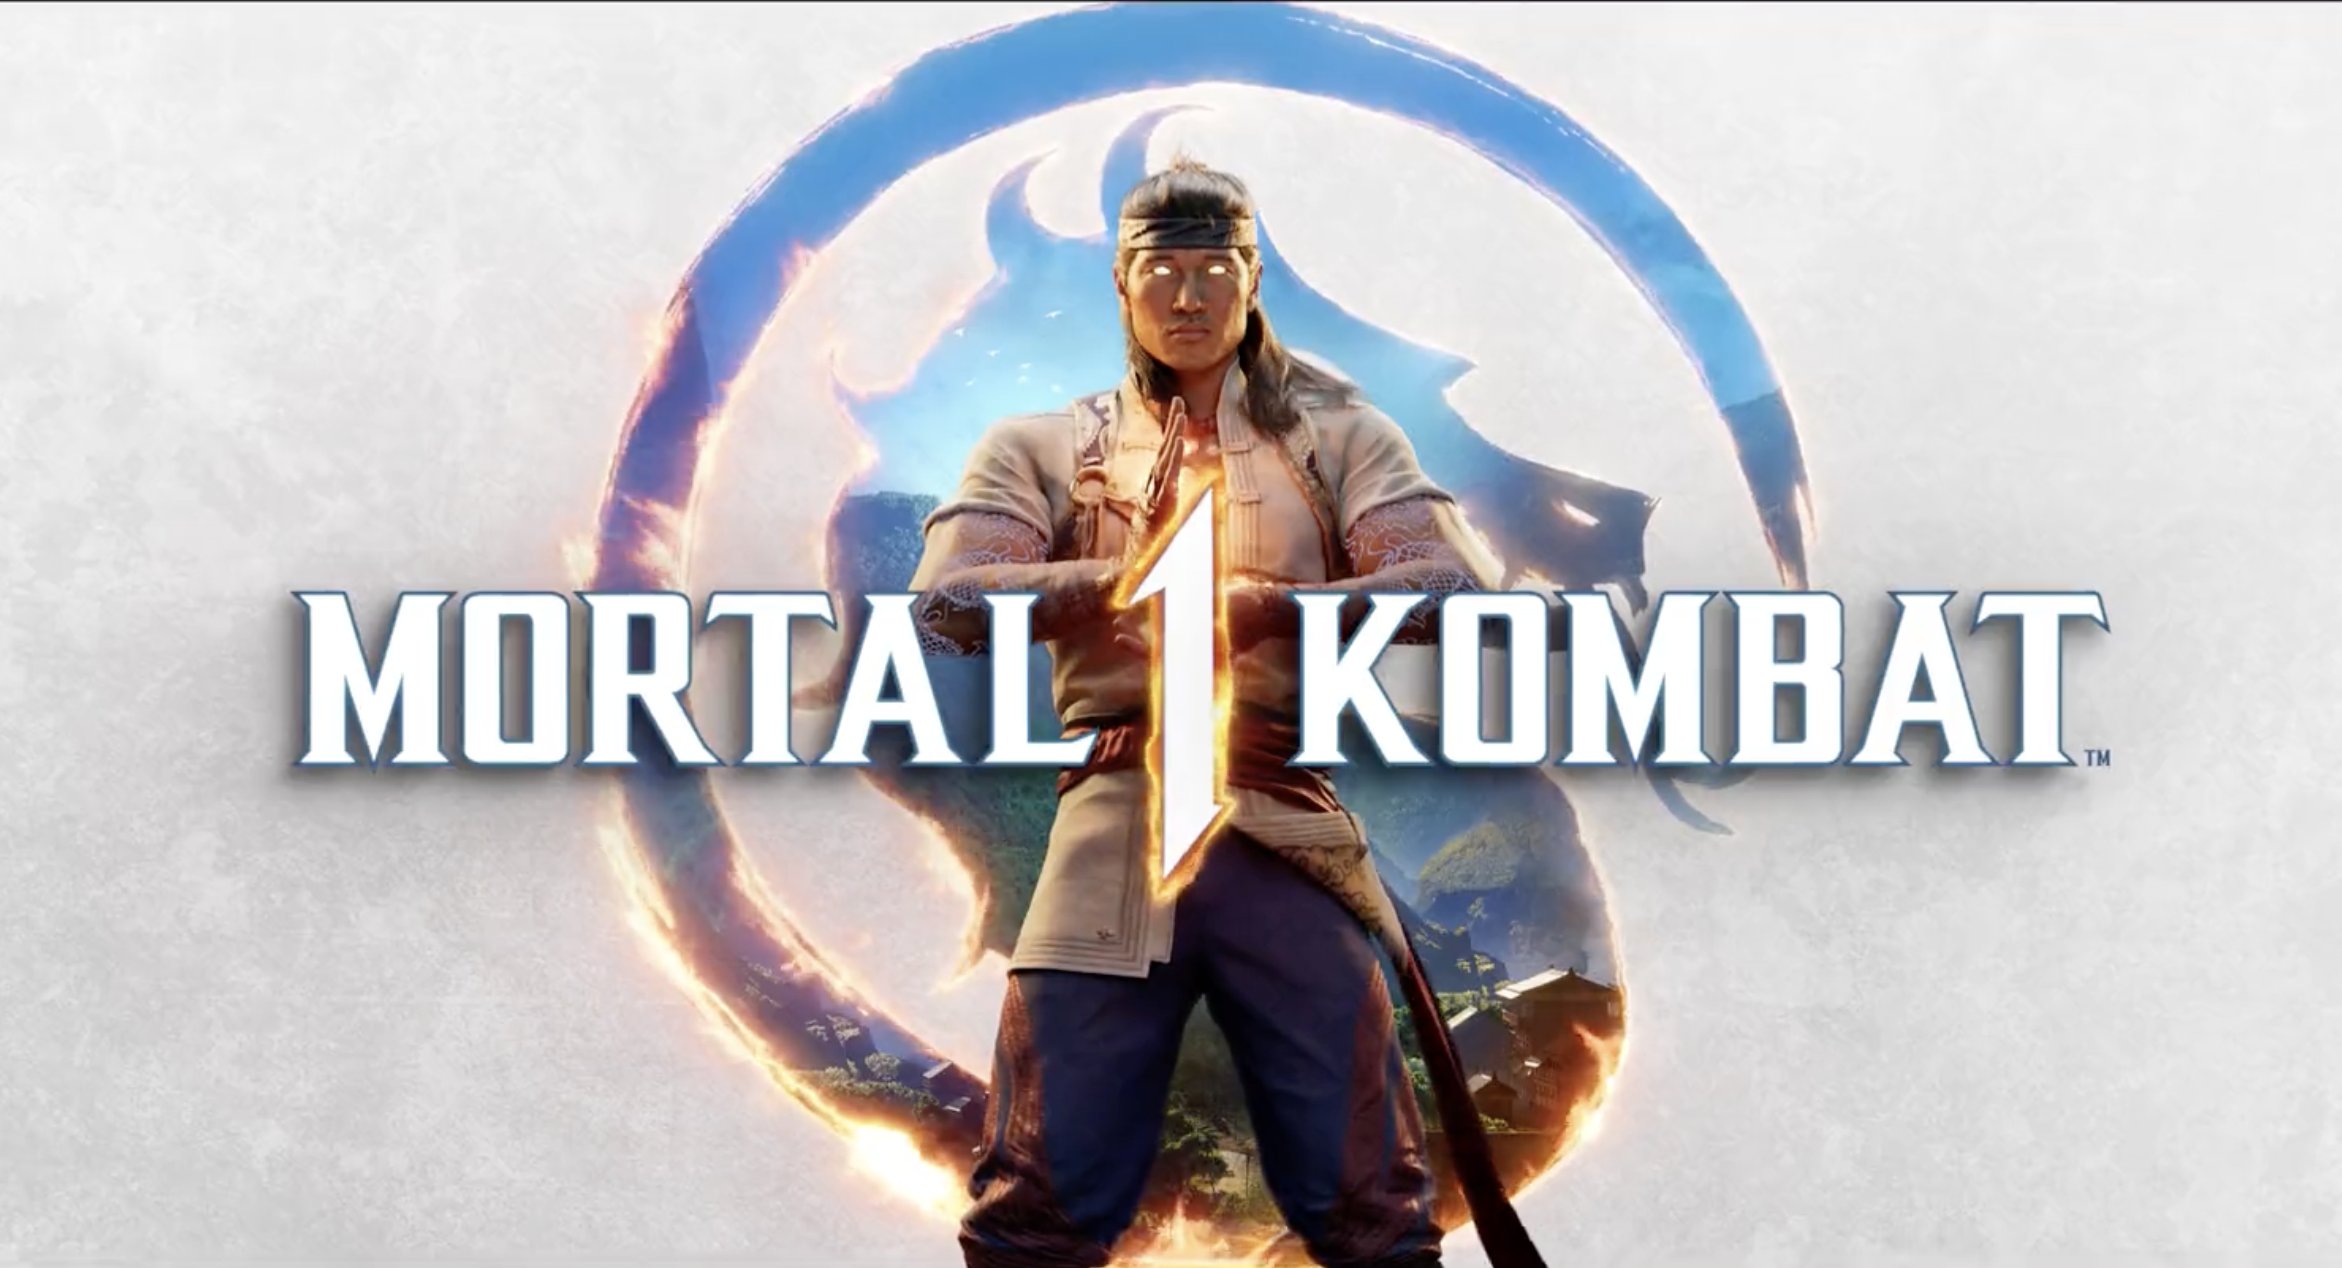 Mortal Kombat 1 reboots a new series this fall